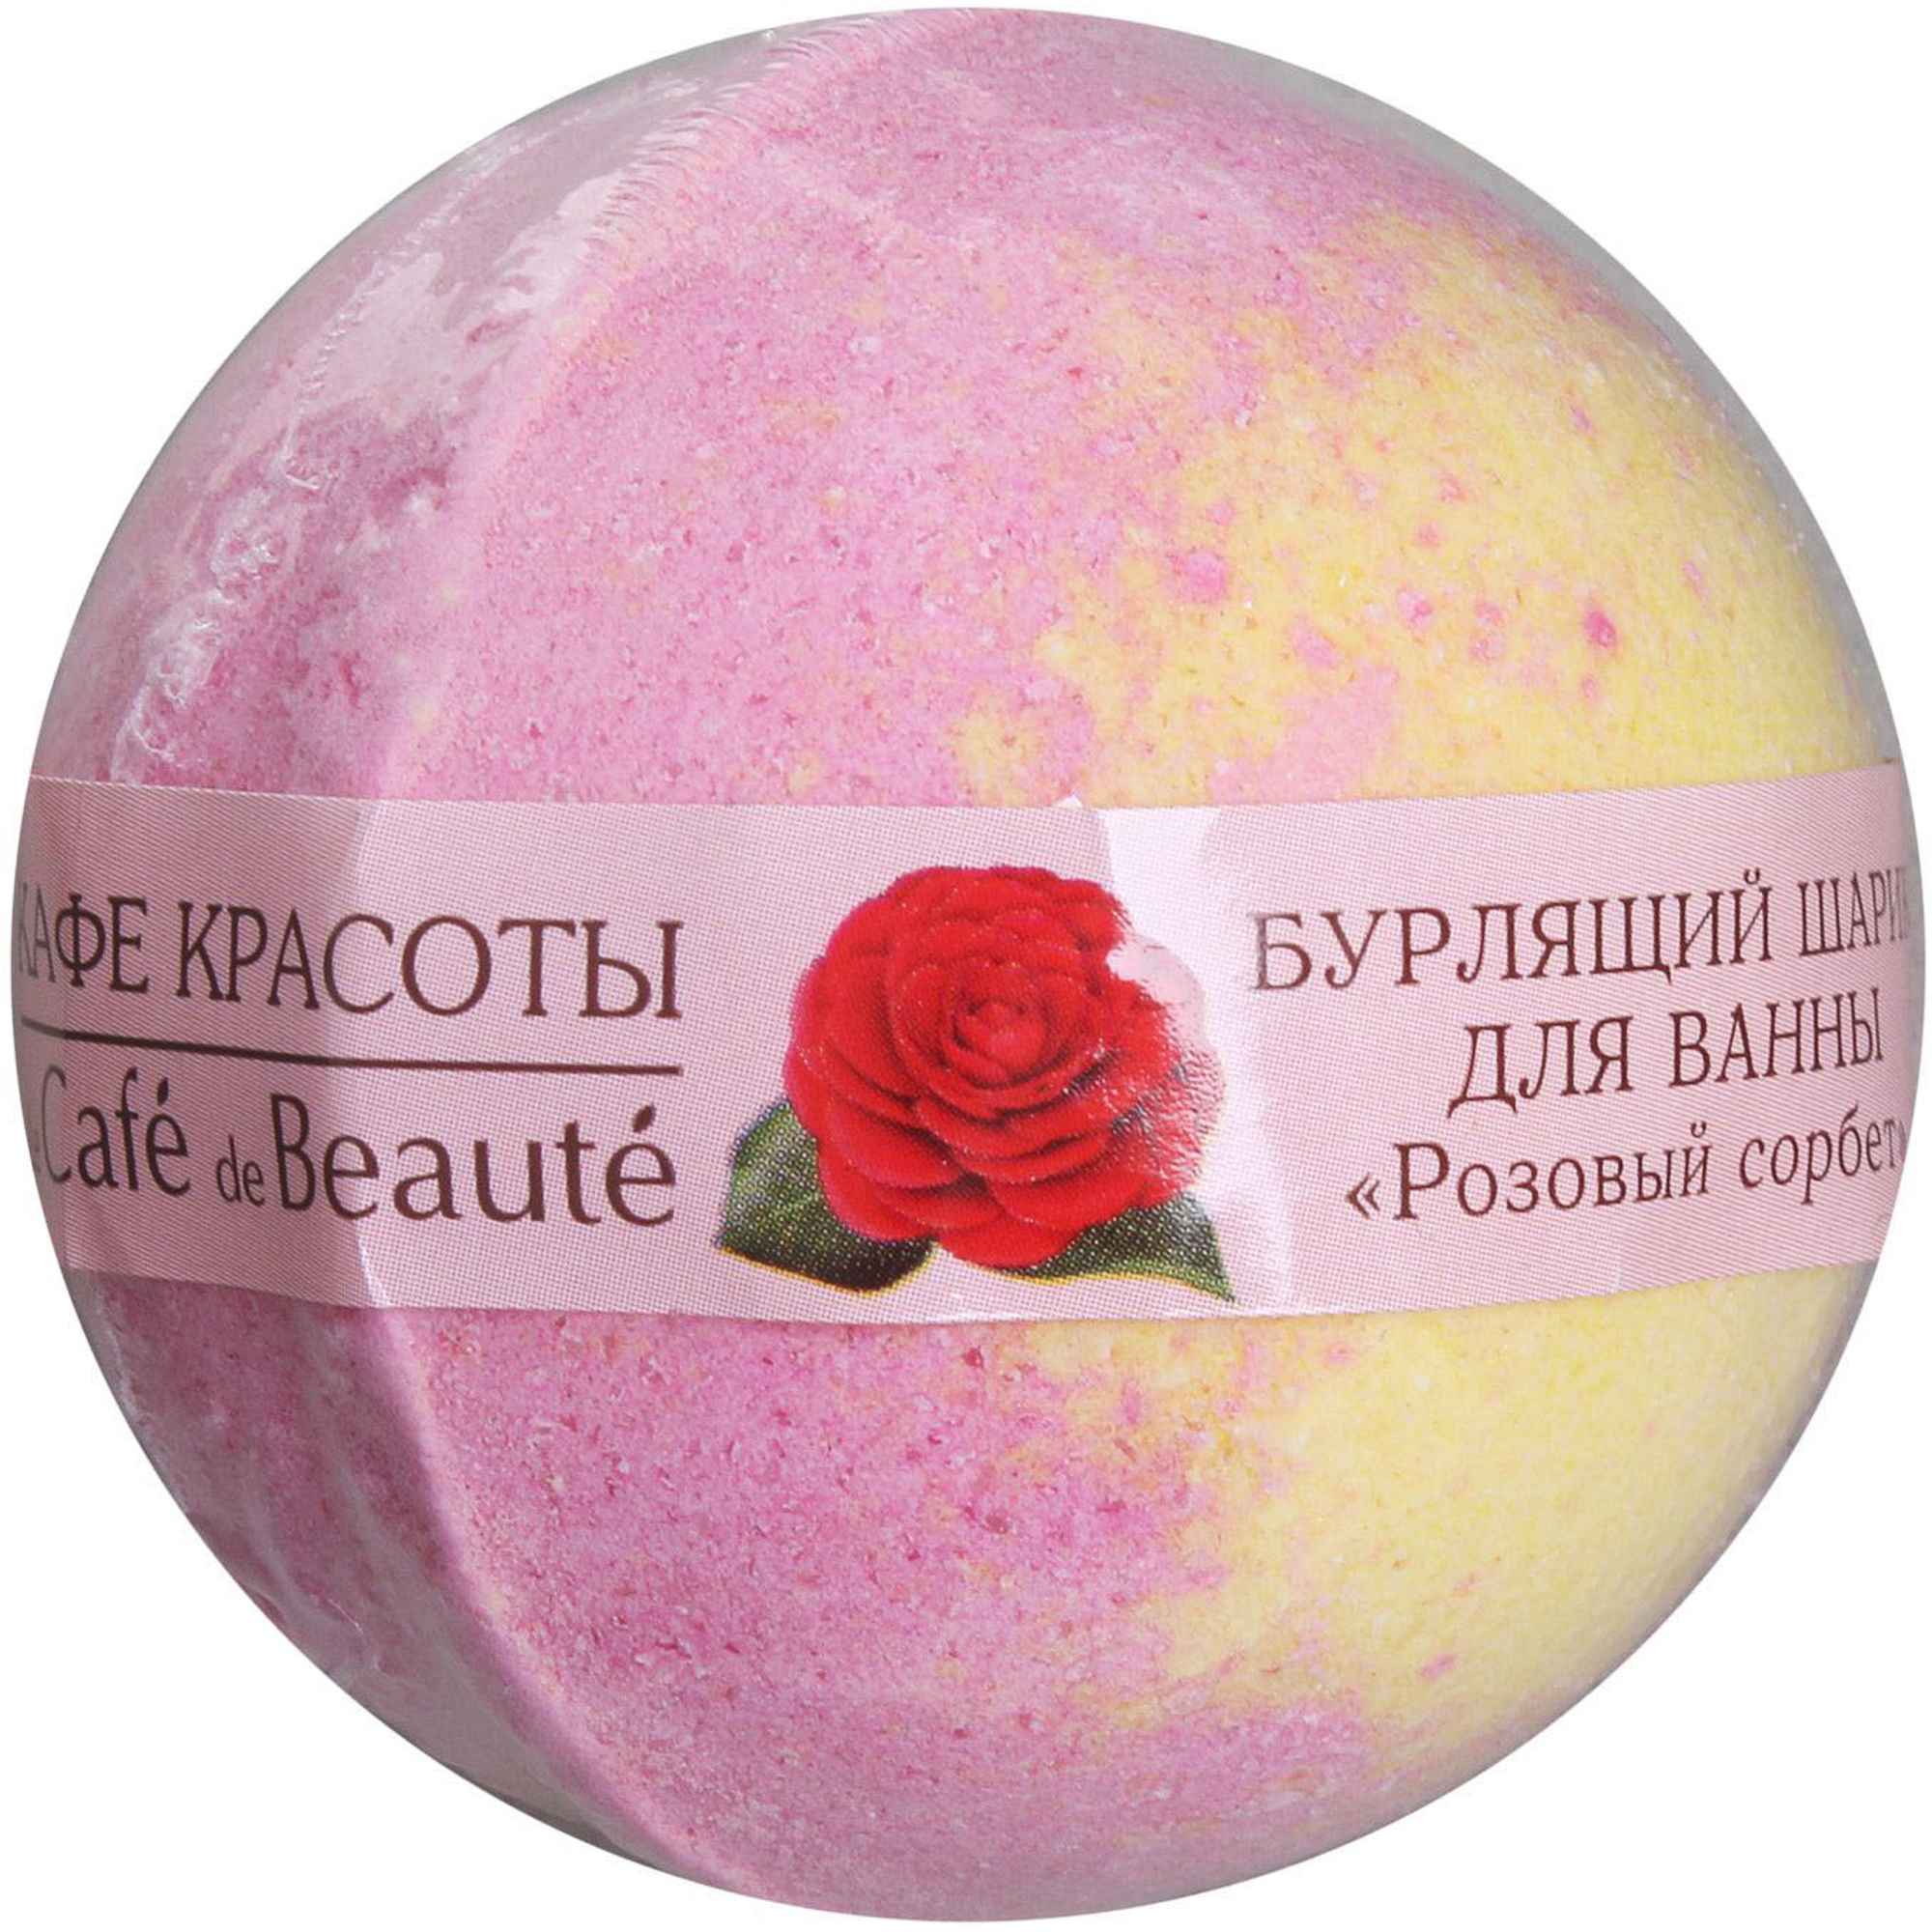 Шар для ванны Кафе Красоты Розовый сорбет 120 г шар для ванны кафе красоты розовый сорбет 120 г